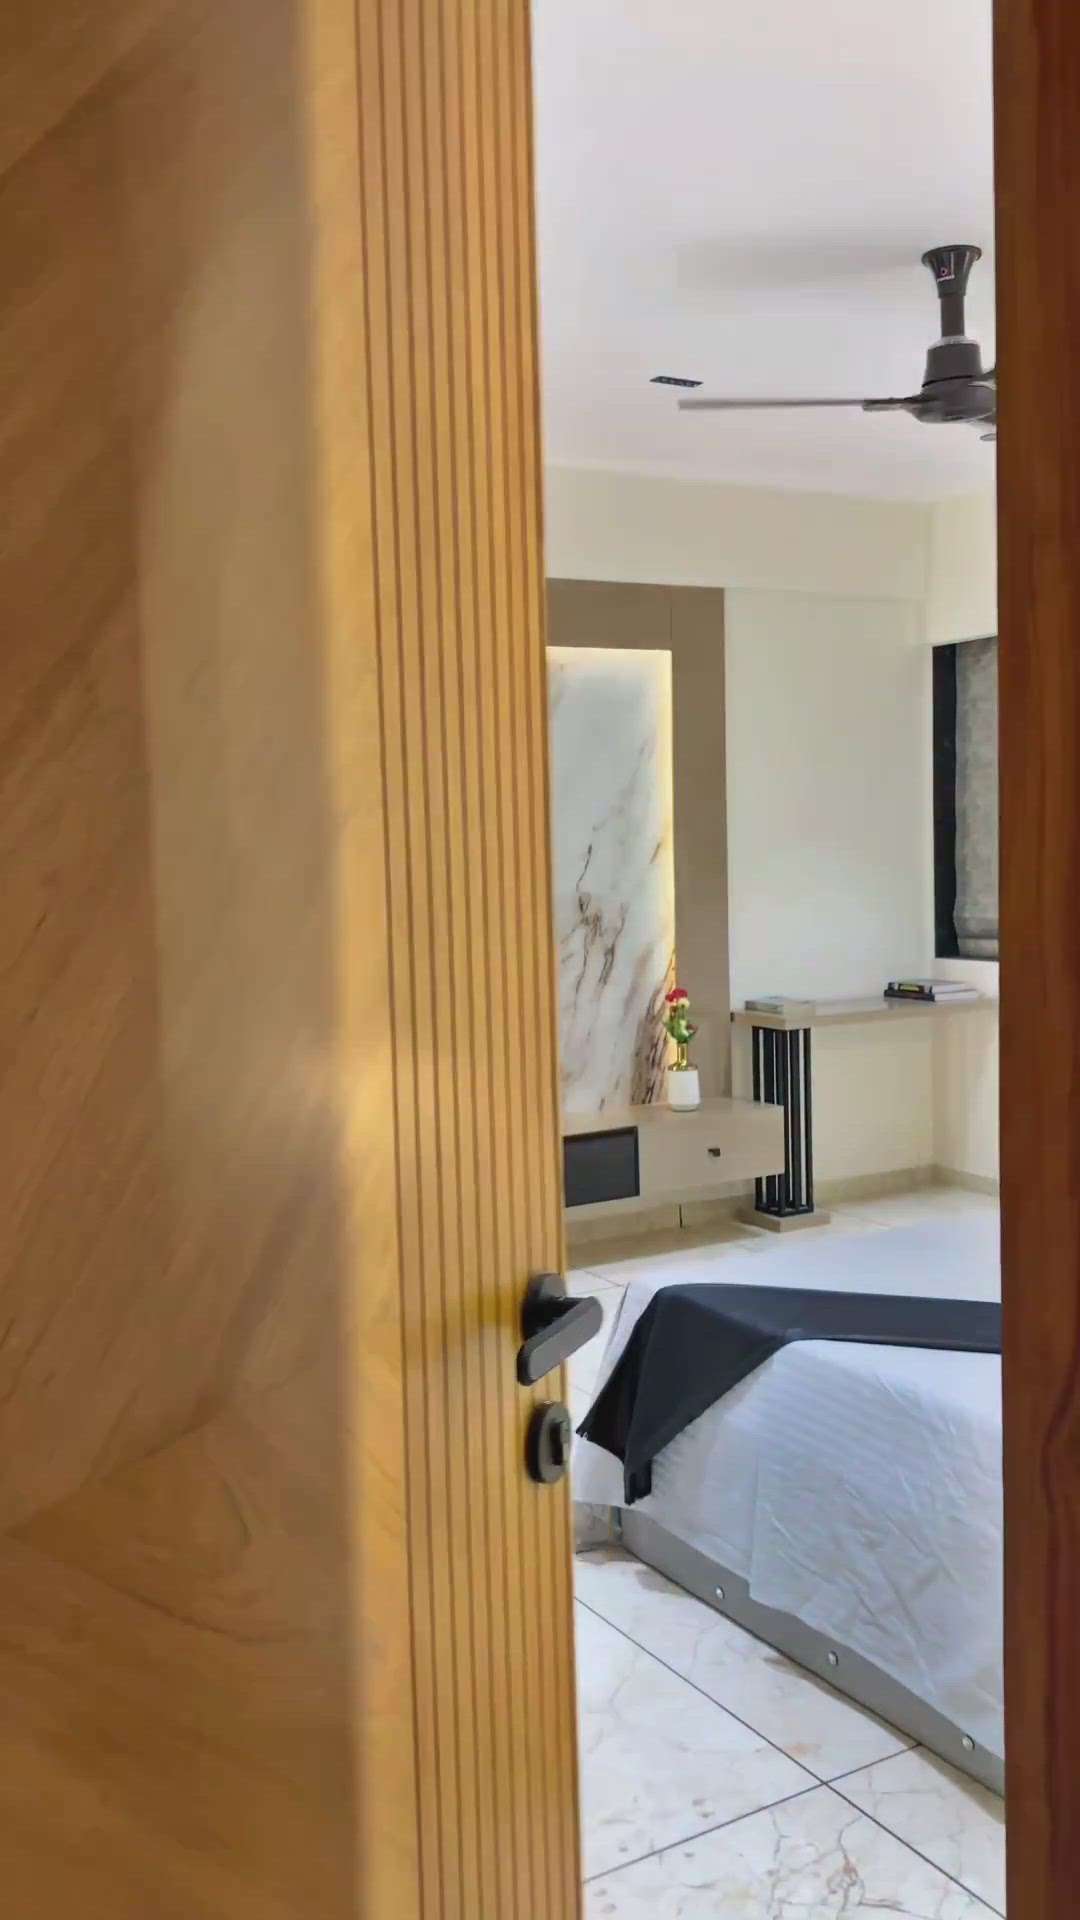 Luxury Living Room & Master Bed Room Design ✨

✨ Opal Construction & Interior
✨ Contact - 8319099875

#HouseRenovation #renovations #InteriorDesigner #KitchenInterior #WalkInWardrobe #MasterBedroom #BedroomDecor #KingsizeBedroom #BedroomIdeas #BedroomDesigns #ModernBedMaking #bedroominterio #wadrobedesign #WardrobeIdeas #SlidingDoorWardrobe #LargeKitchen #KitchenIdeas #KitchenCabinet #LargeKitchen #ModularKitchen #LivingRoomTVCabinet #LivingRoomTV #KidsRoom #kidsroomdesign #HouseRenovation